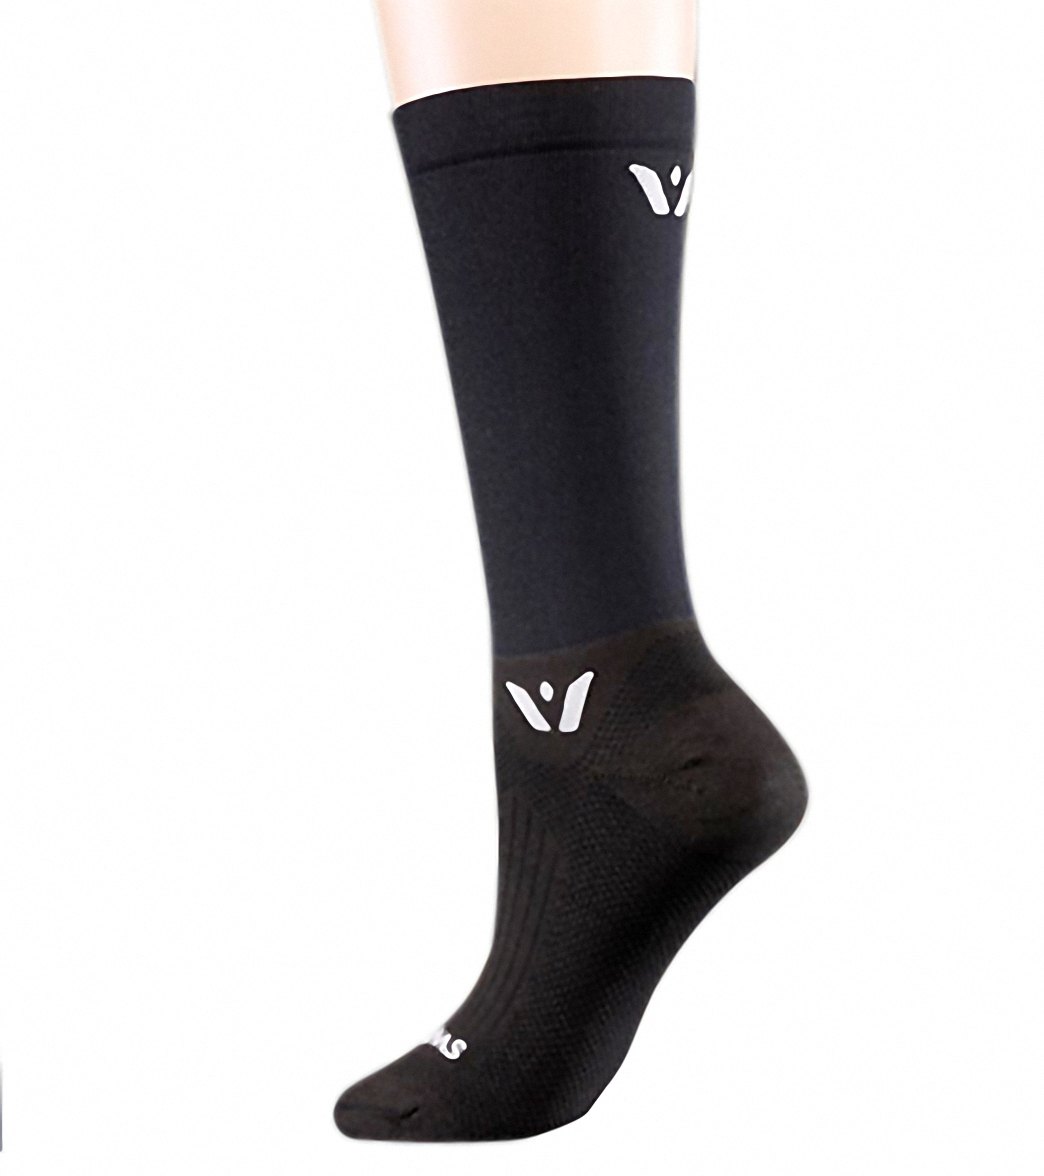 Swiftwick Aspire Seven Running Compression Socks - Black Medium - Swimoutlet.com